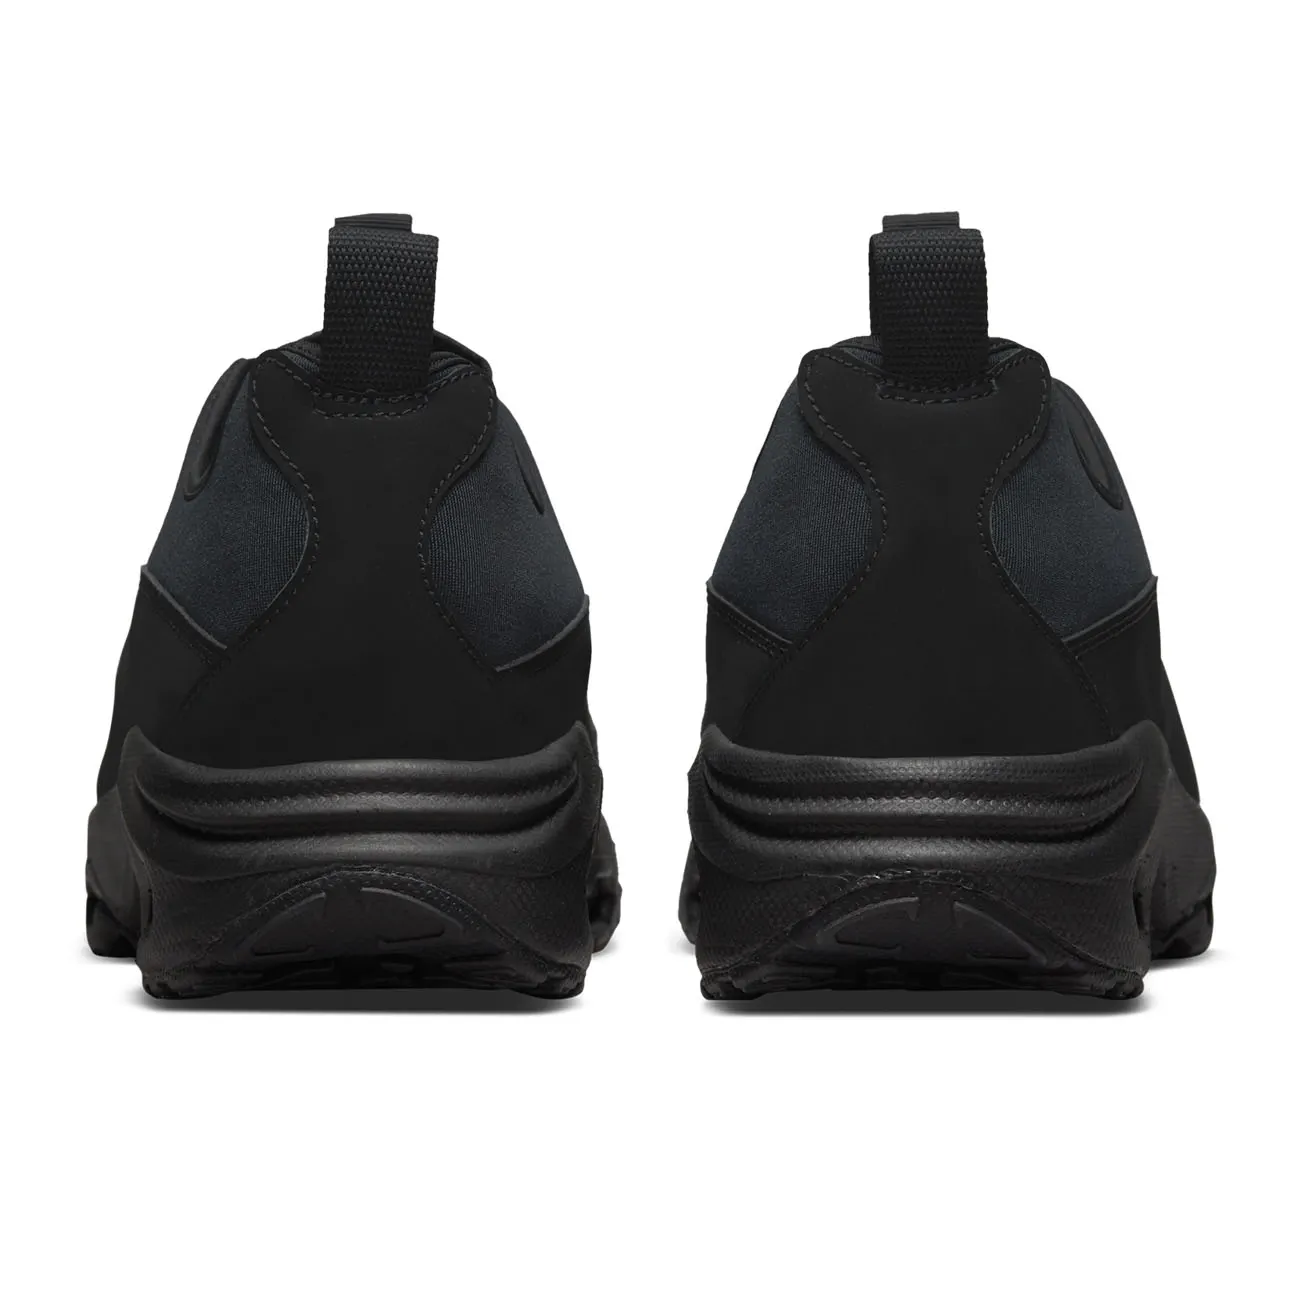 Comme des Garçons x Nike Air Max Sunder "Triple Black"